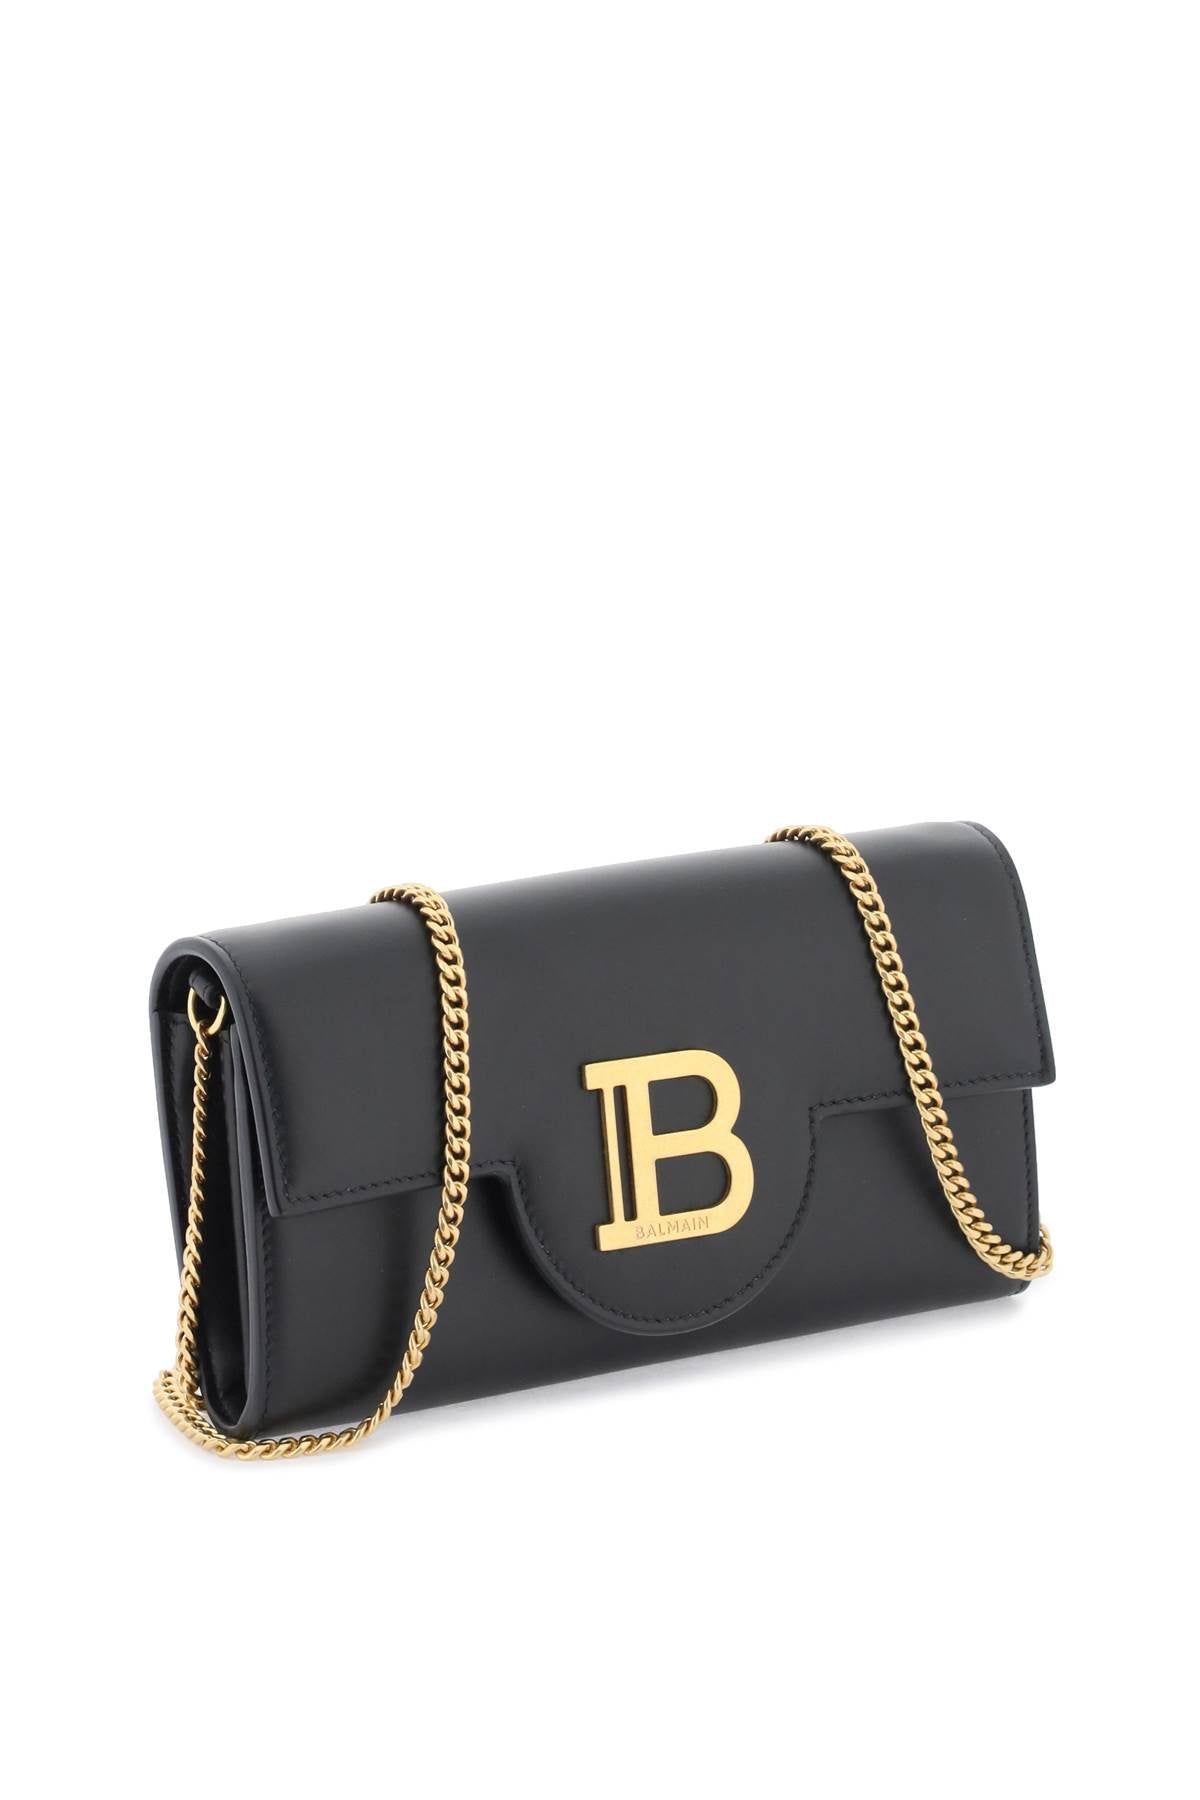 Balmain B-Buzz Crossbody Leather Mini Bag Black